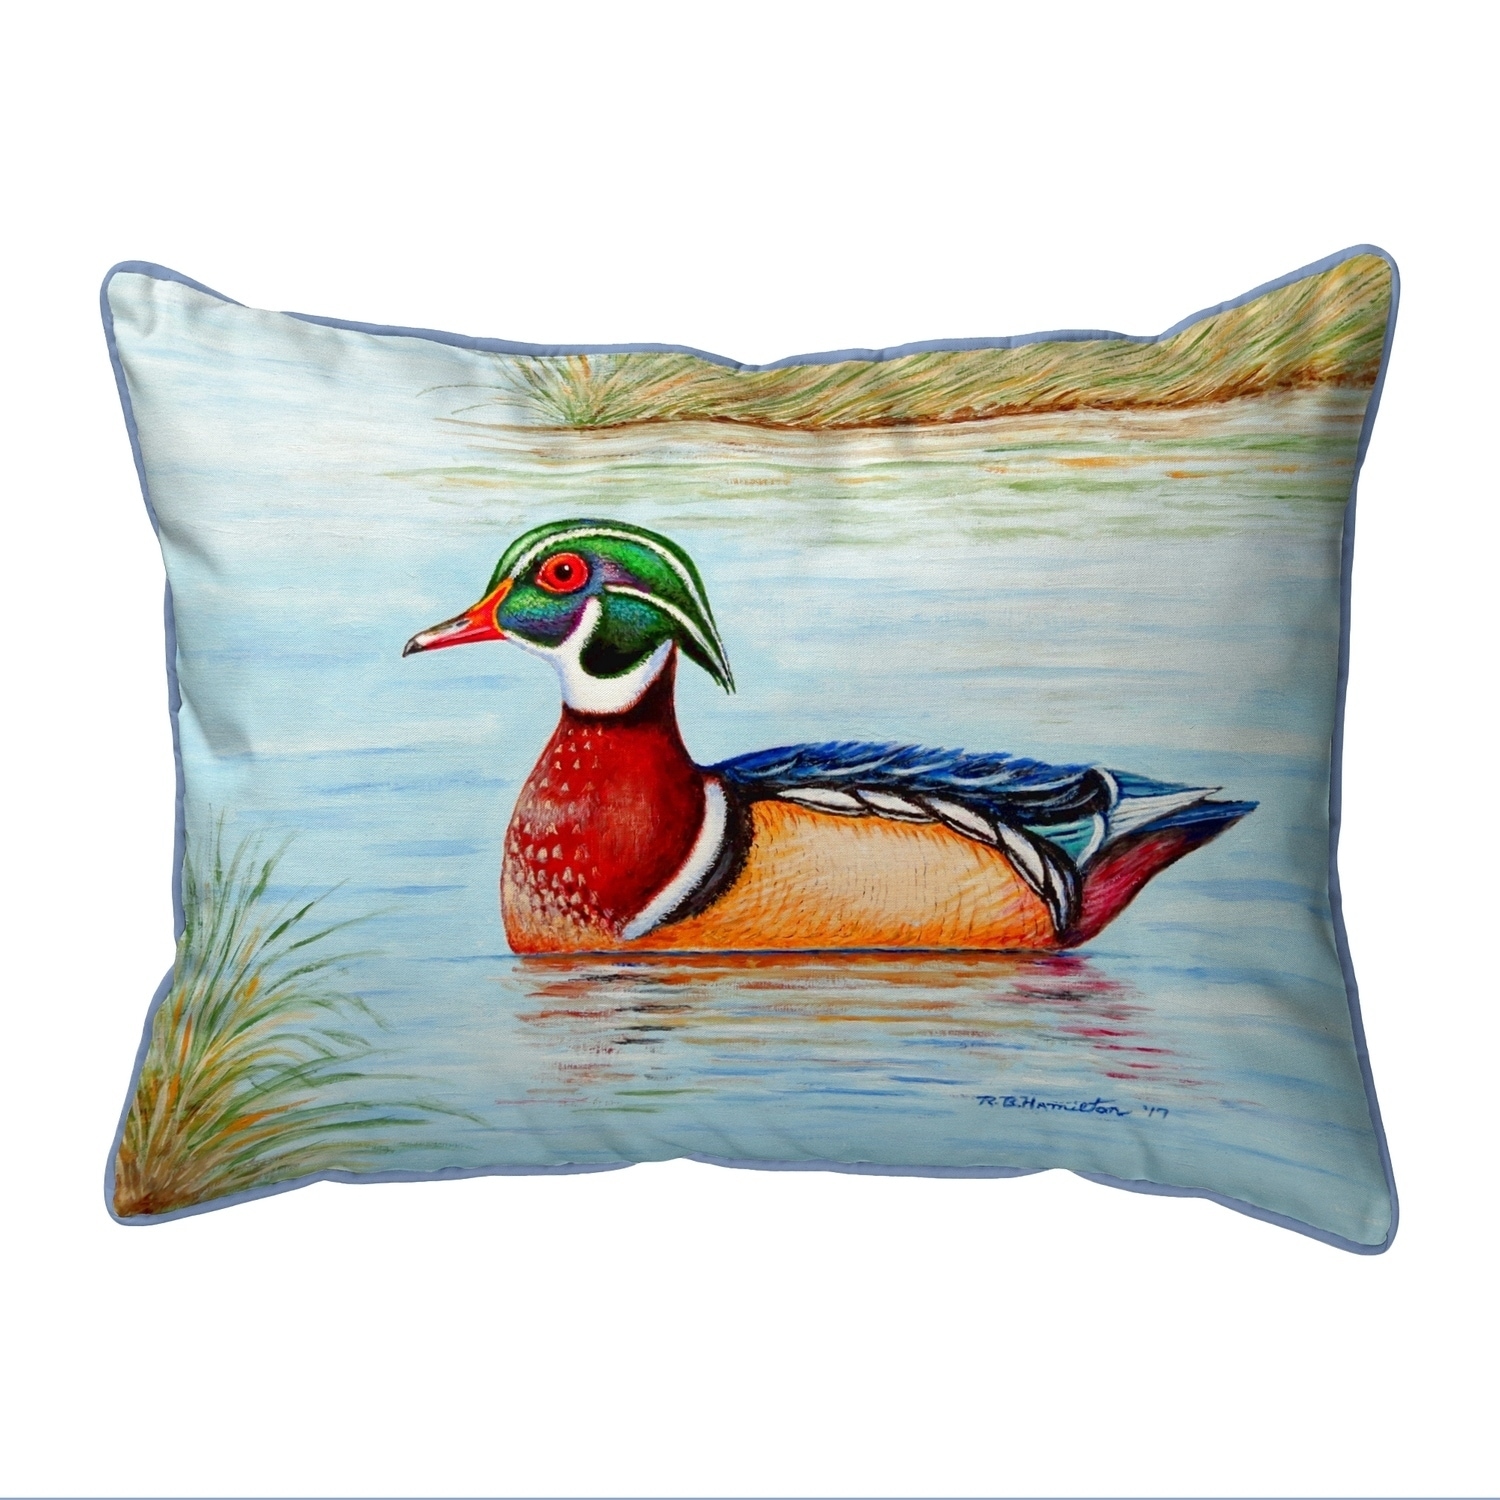 Male Wood Duck II Small Outdoor/Indoor Pillow 11x14 - Bed Bath & Beyond -  30421483